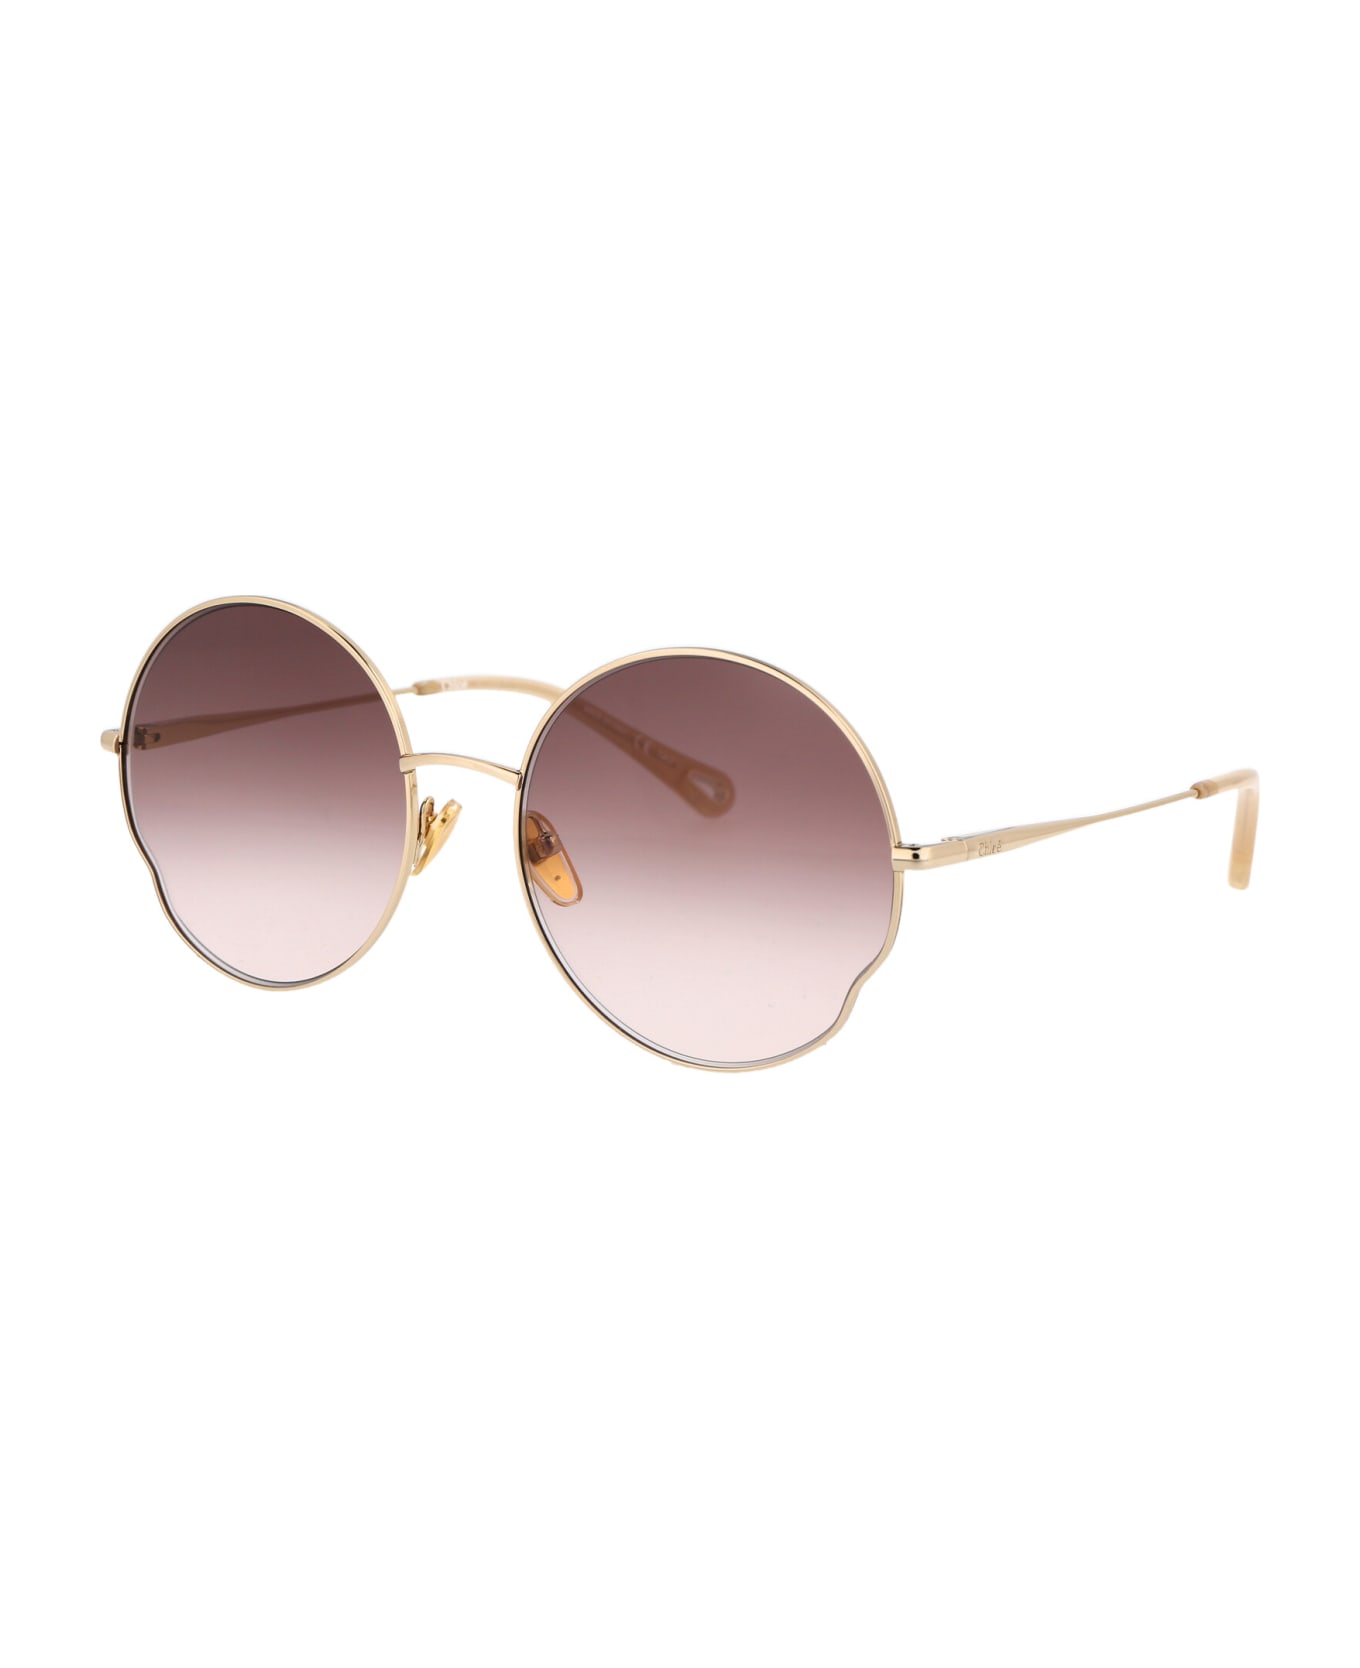 Chloé Eyewear Ch0095s Sunglasses - 005 GOLD GOLD BROWN サングラス